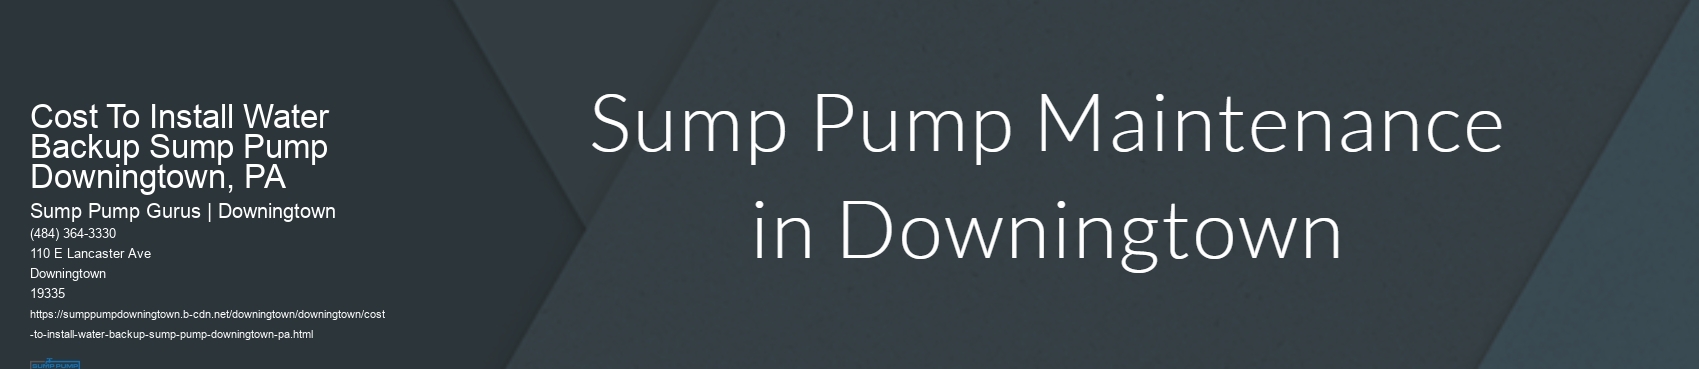 Cost To Install Water Backup Sump Pump Downingtown, PA